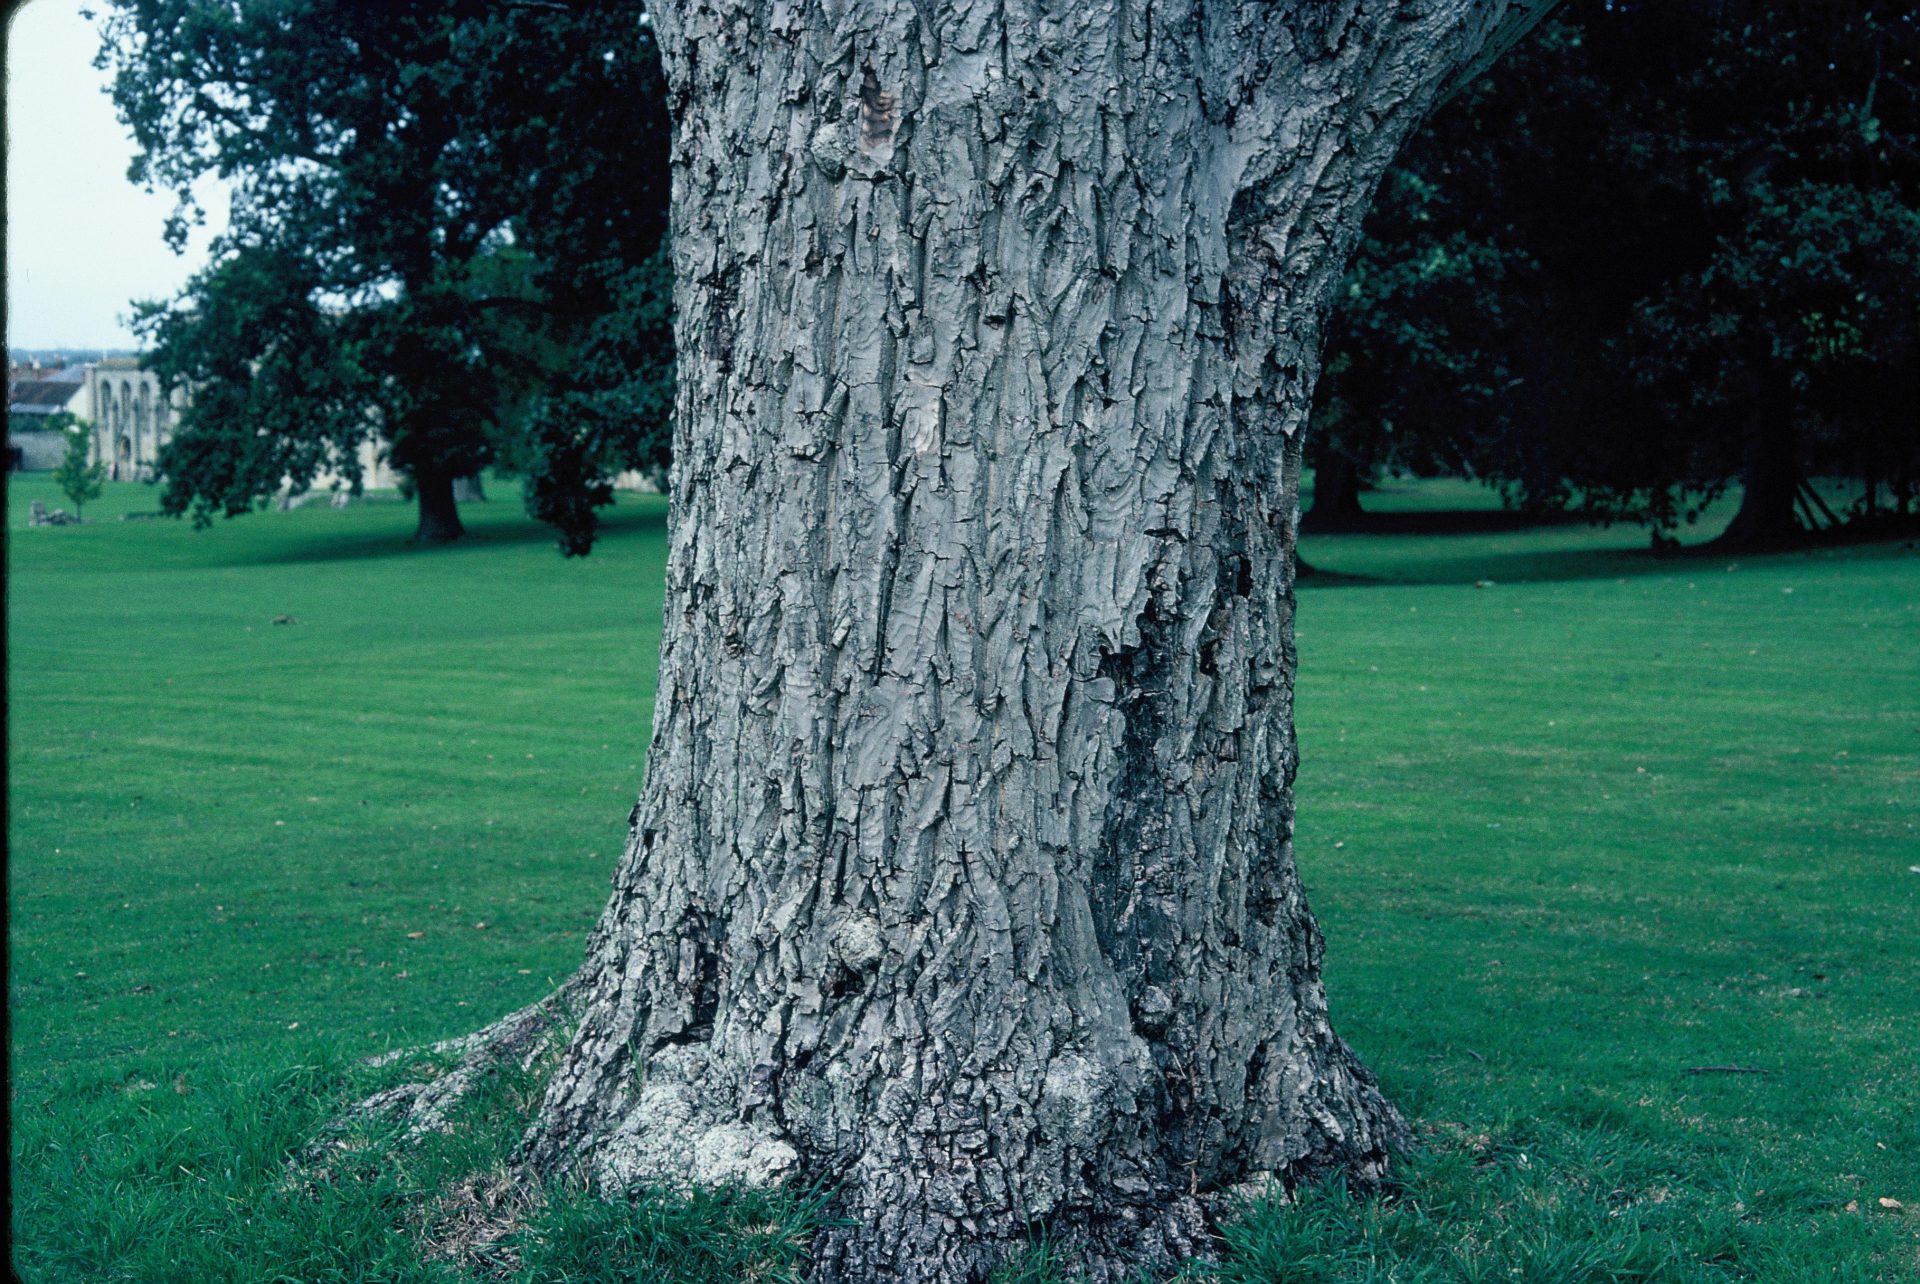 The distinctive bark of common walnut.